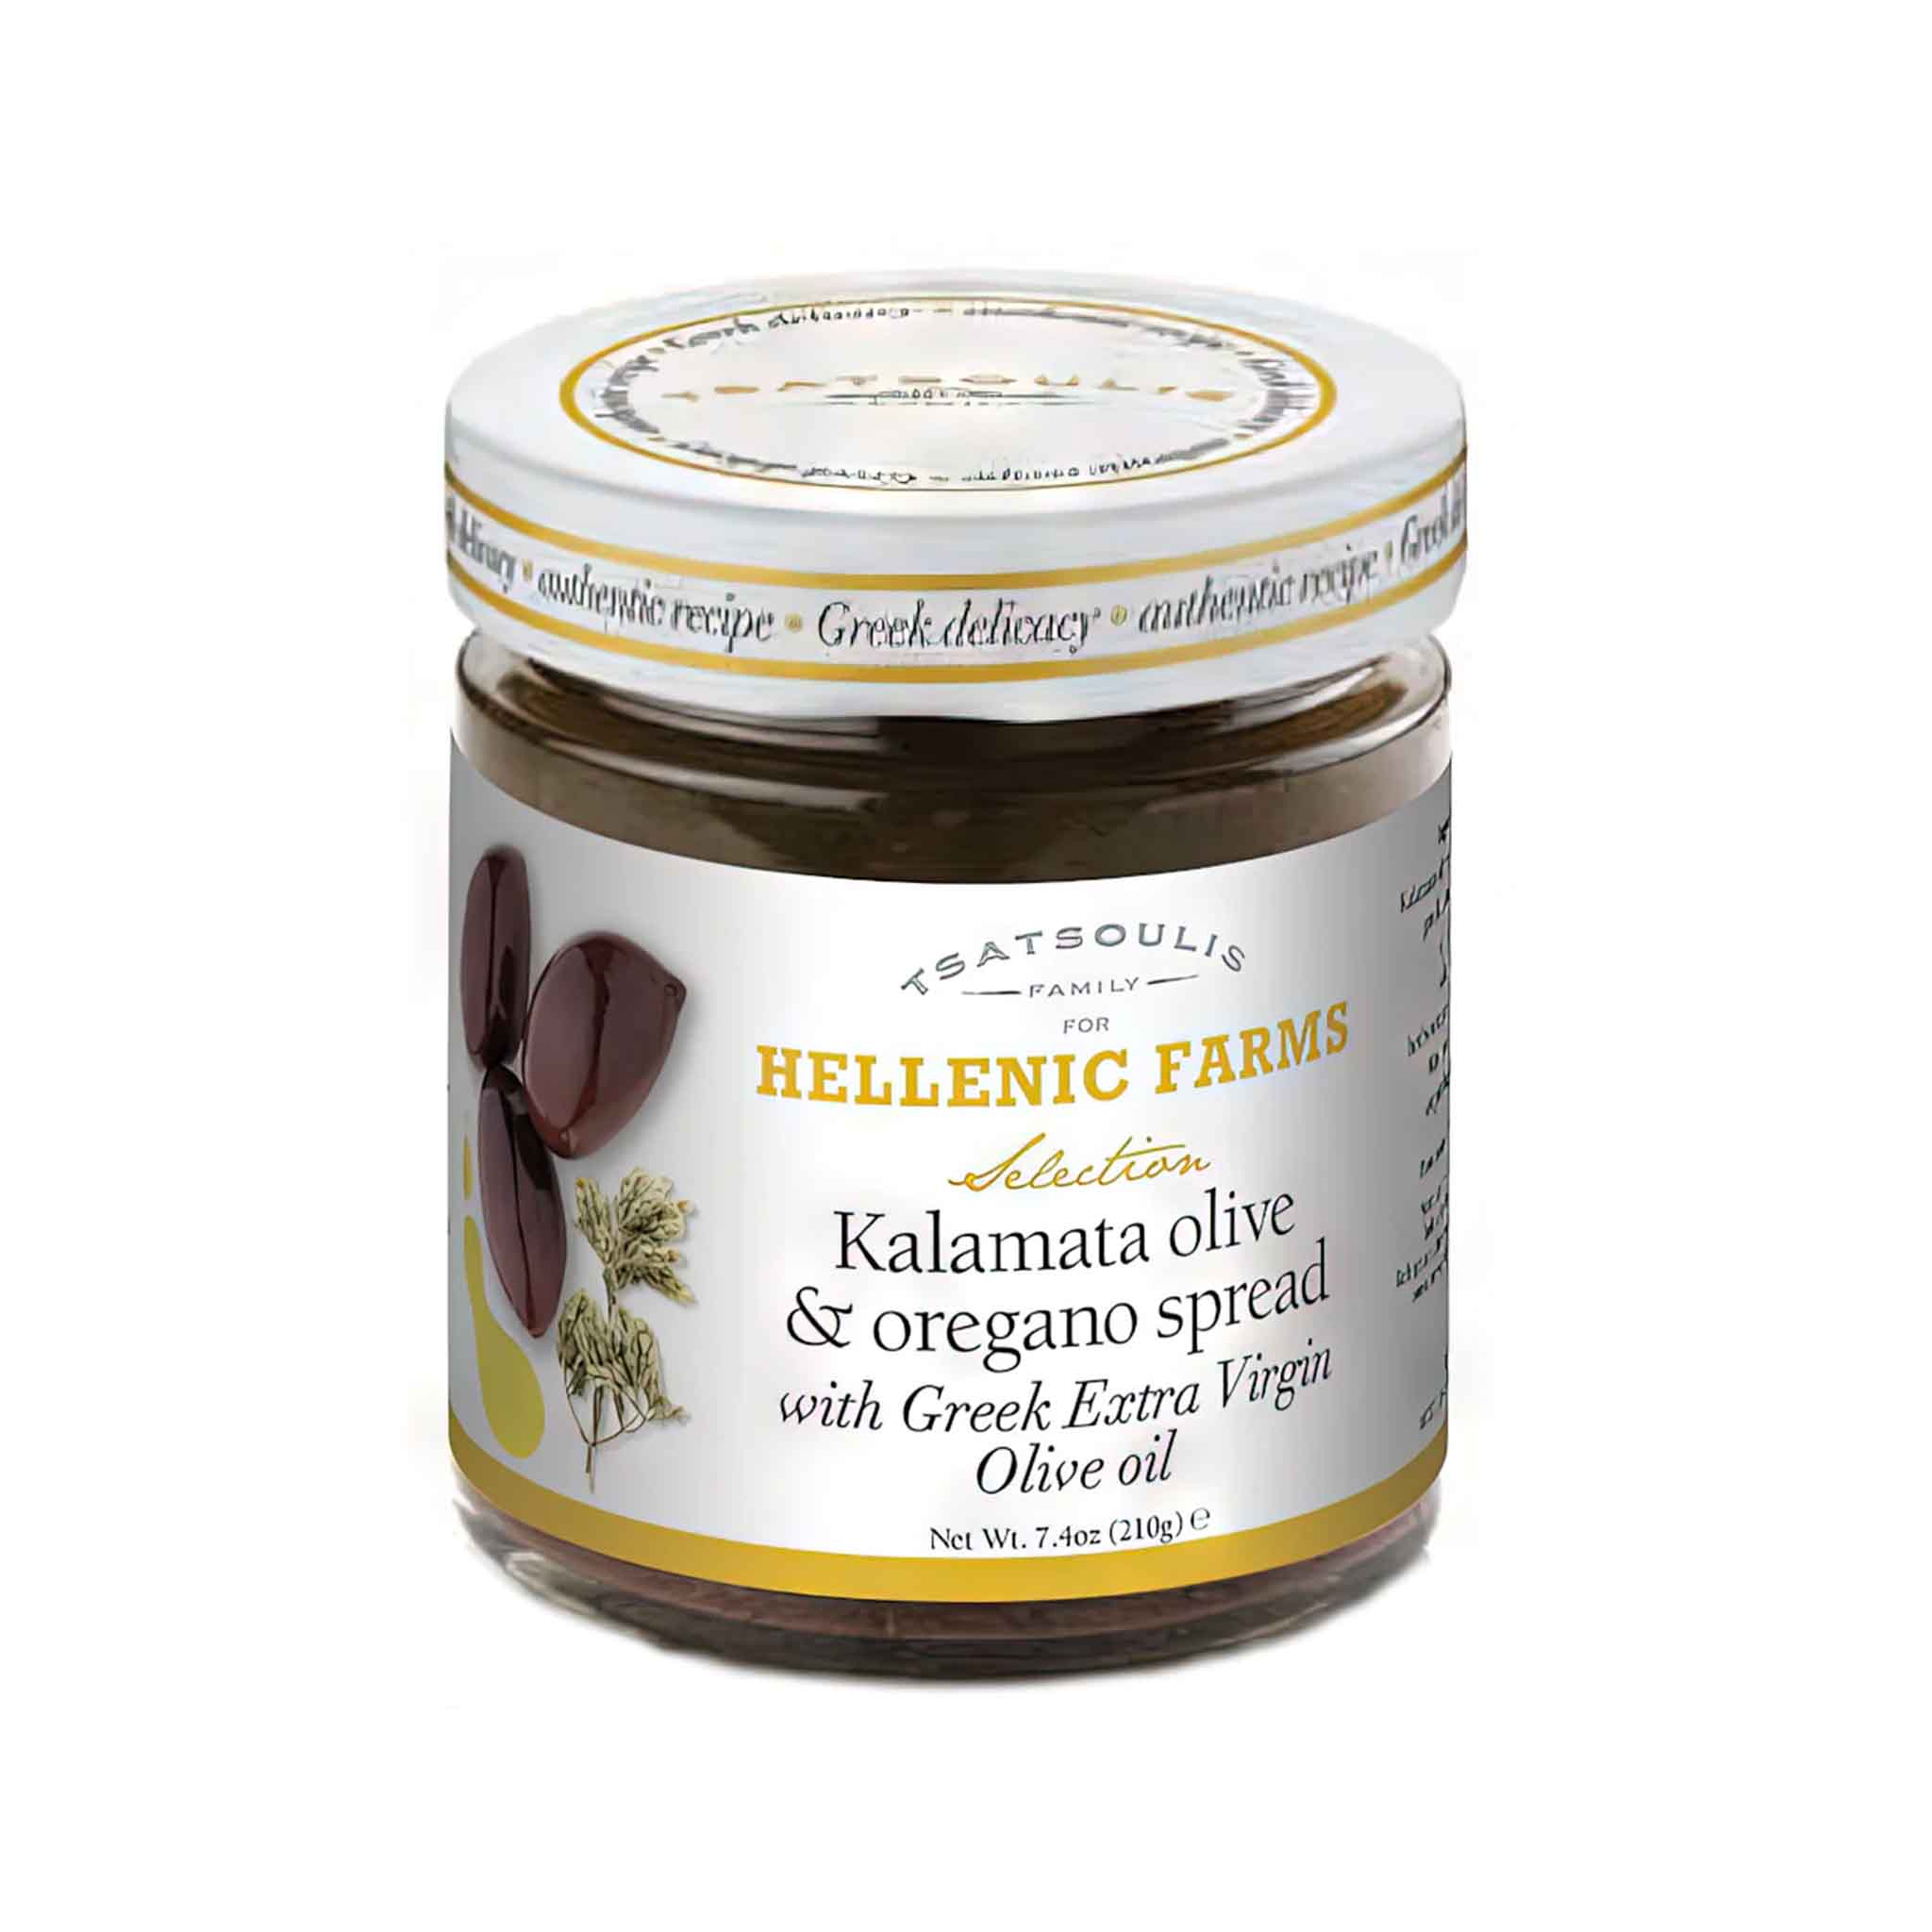 Hellenic Kalamata Olive Oregano Spread